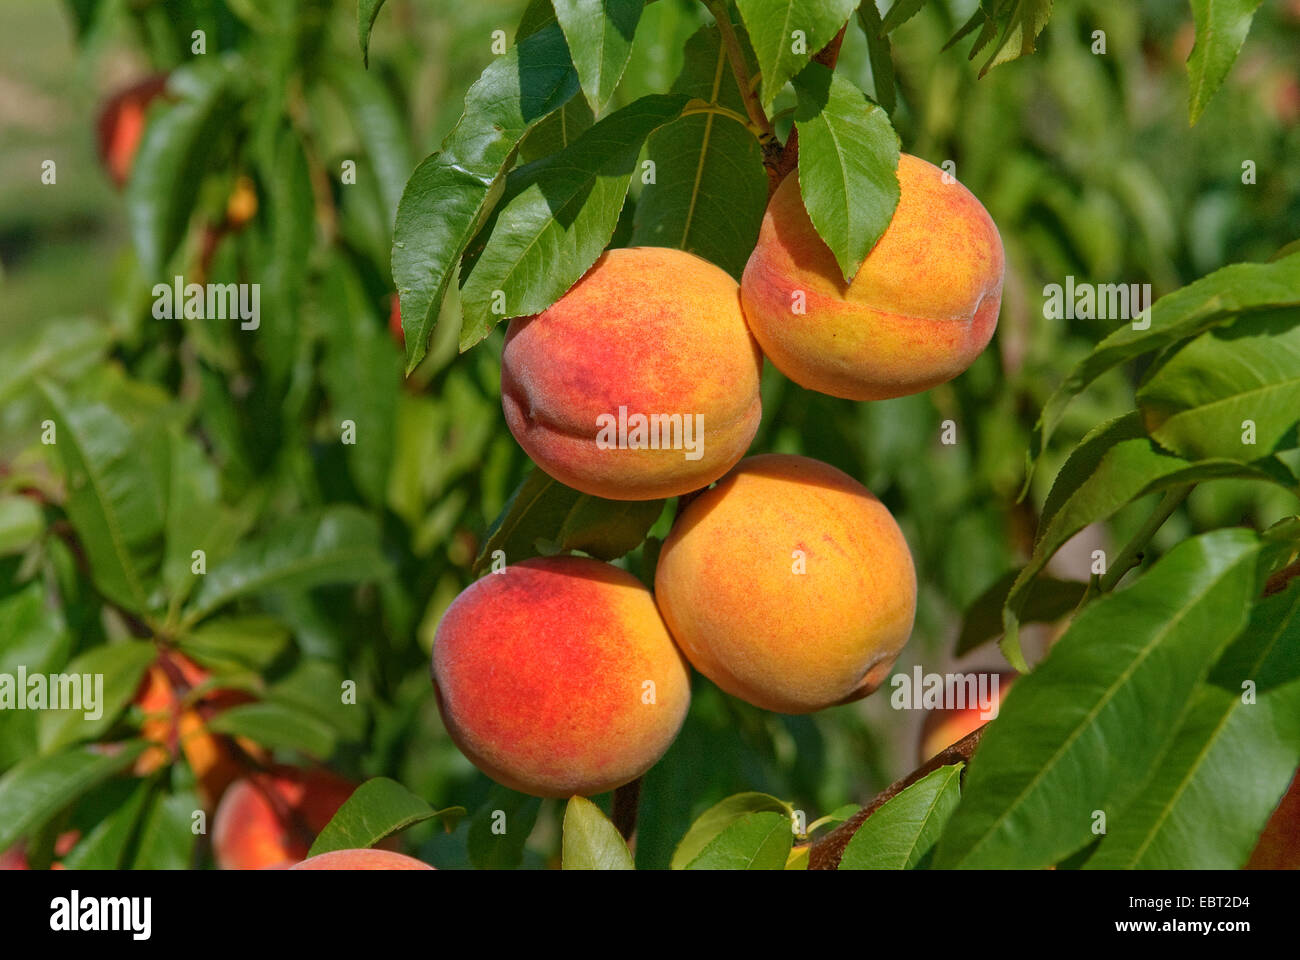 Pfirsich (Prunus Persica 'South Haven', Prunus Persica South Haven), Sorte South Haven, Pfirsiche auf einem Baum Stockfoto